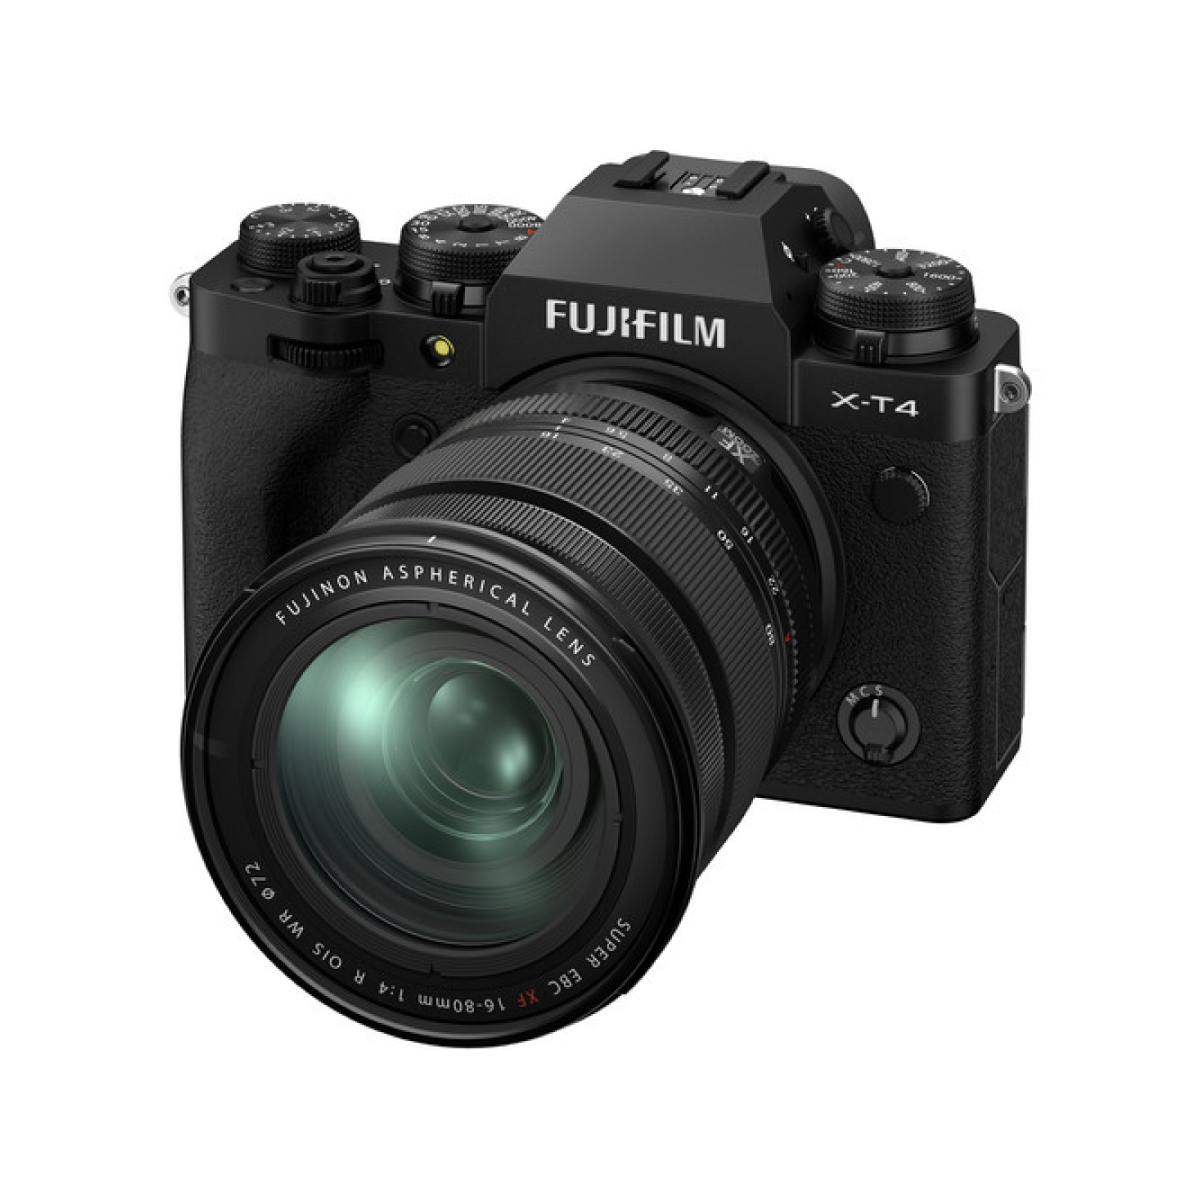 Fujifilm X-T4 26 MP Mirrorless Camera Body with XF16-80mm Lens – Black (11)